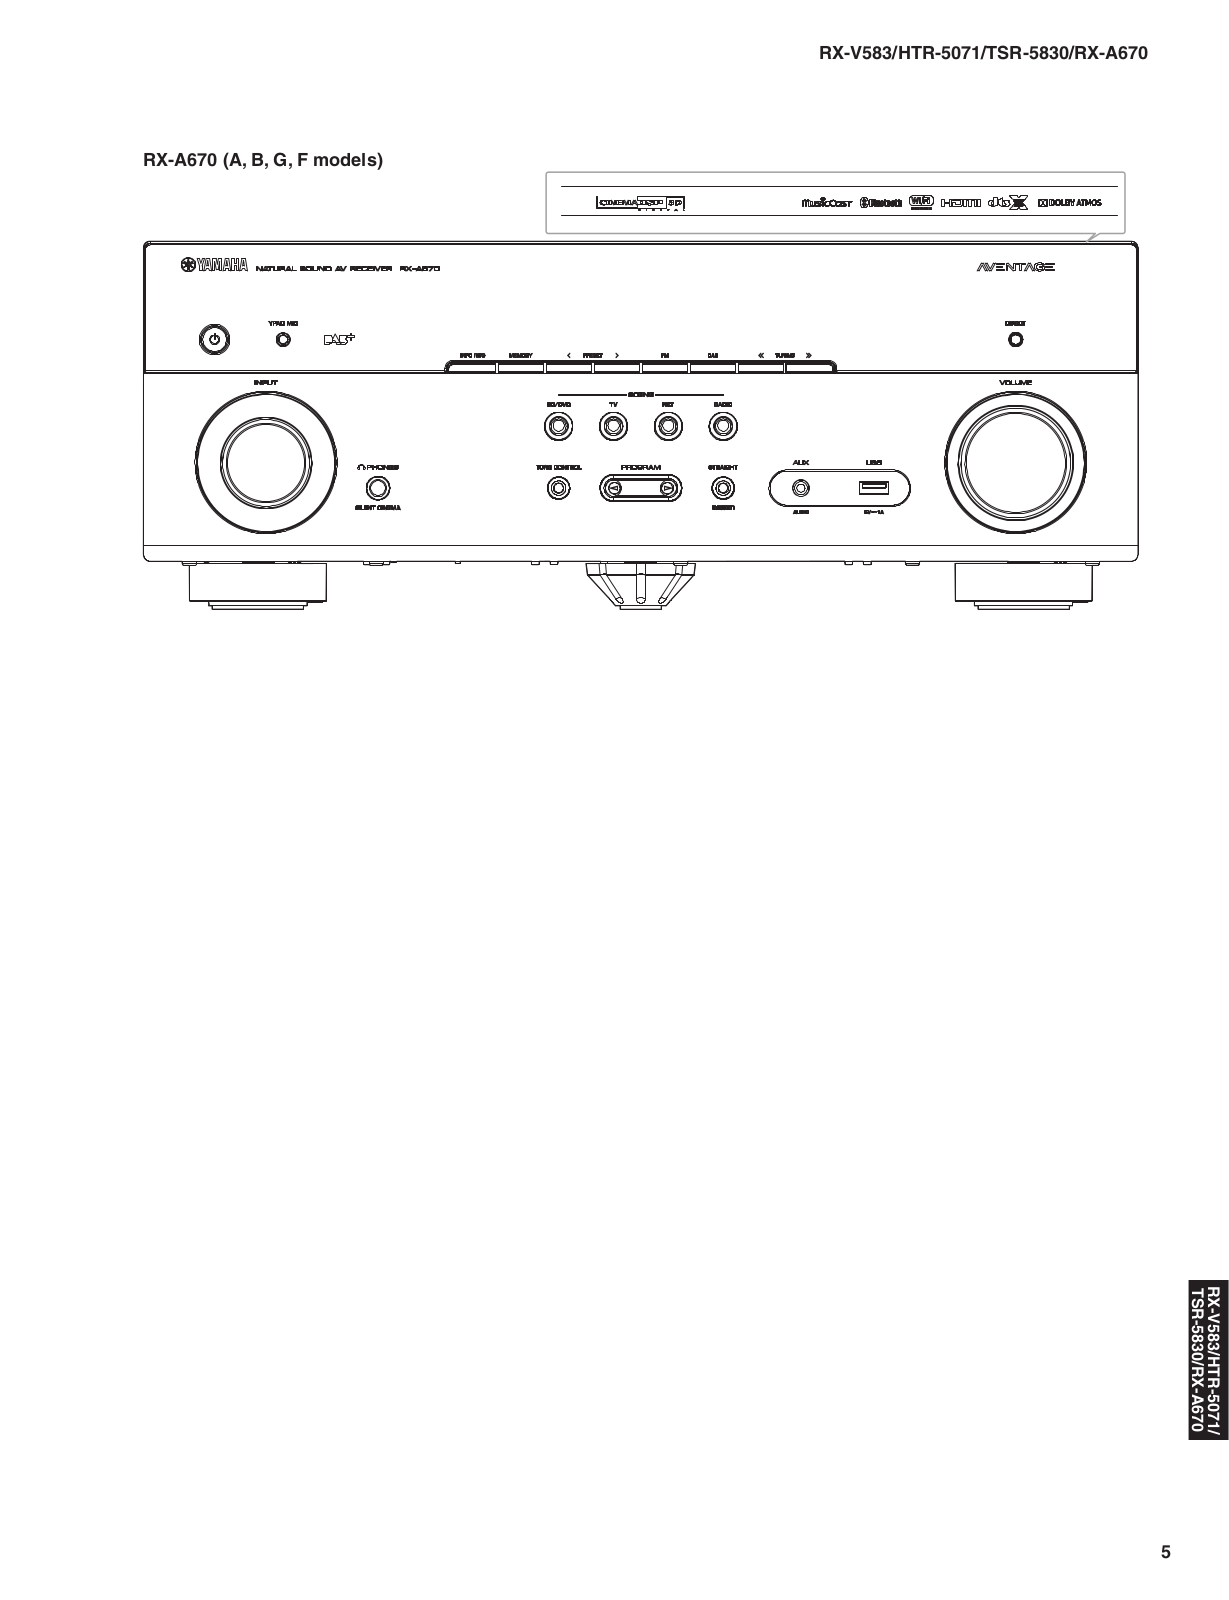 Yamaha RX-V583, HTR-5071, TSR-5830, RX-A670 Service manual